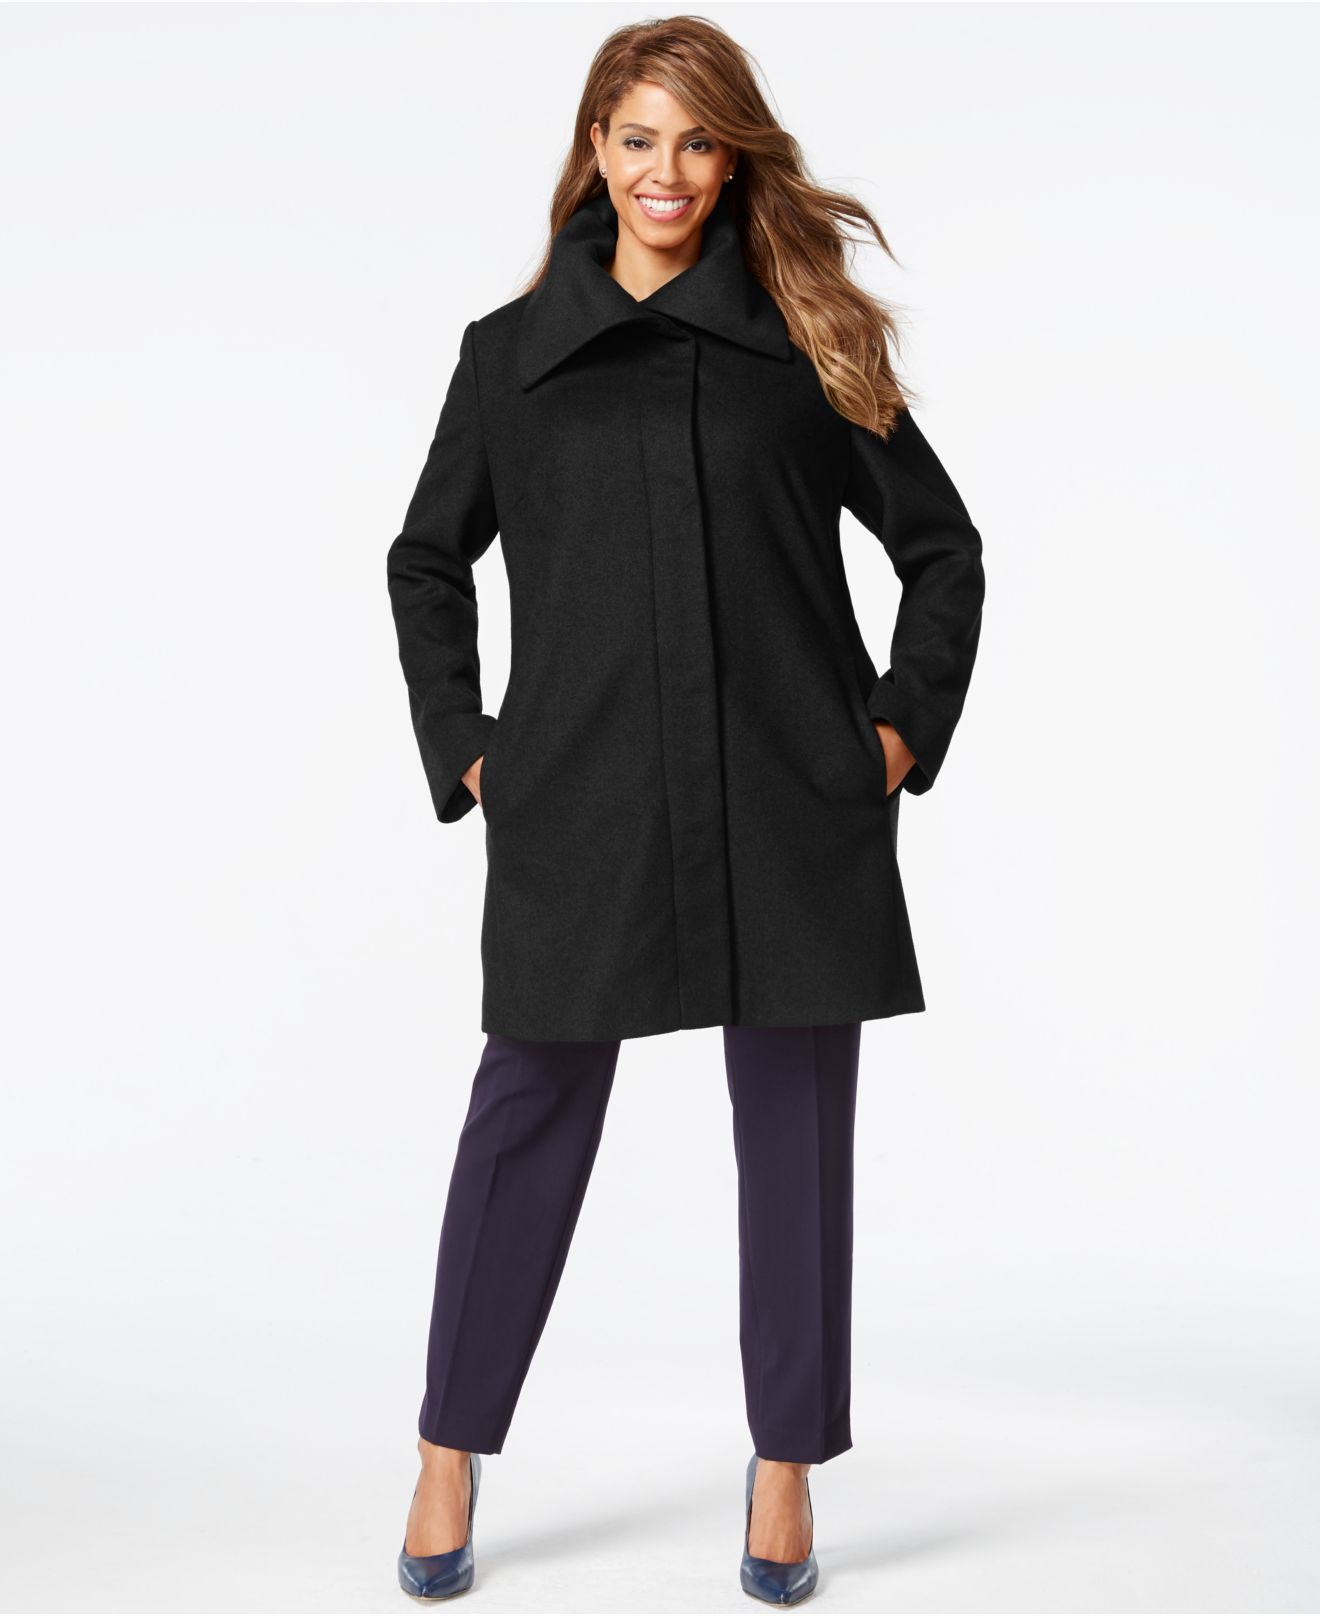 Jones New York Synthetic Plus Size Clean Front Walker Coat in Black - Lyst